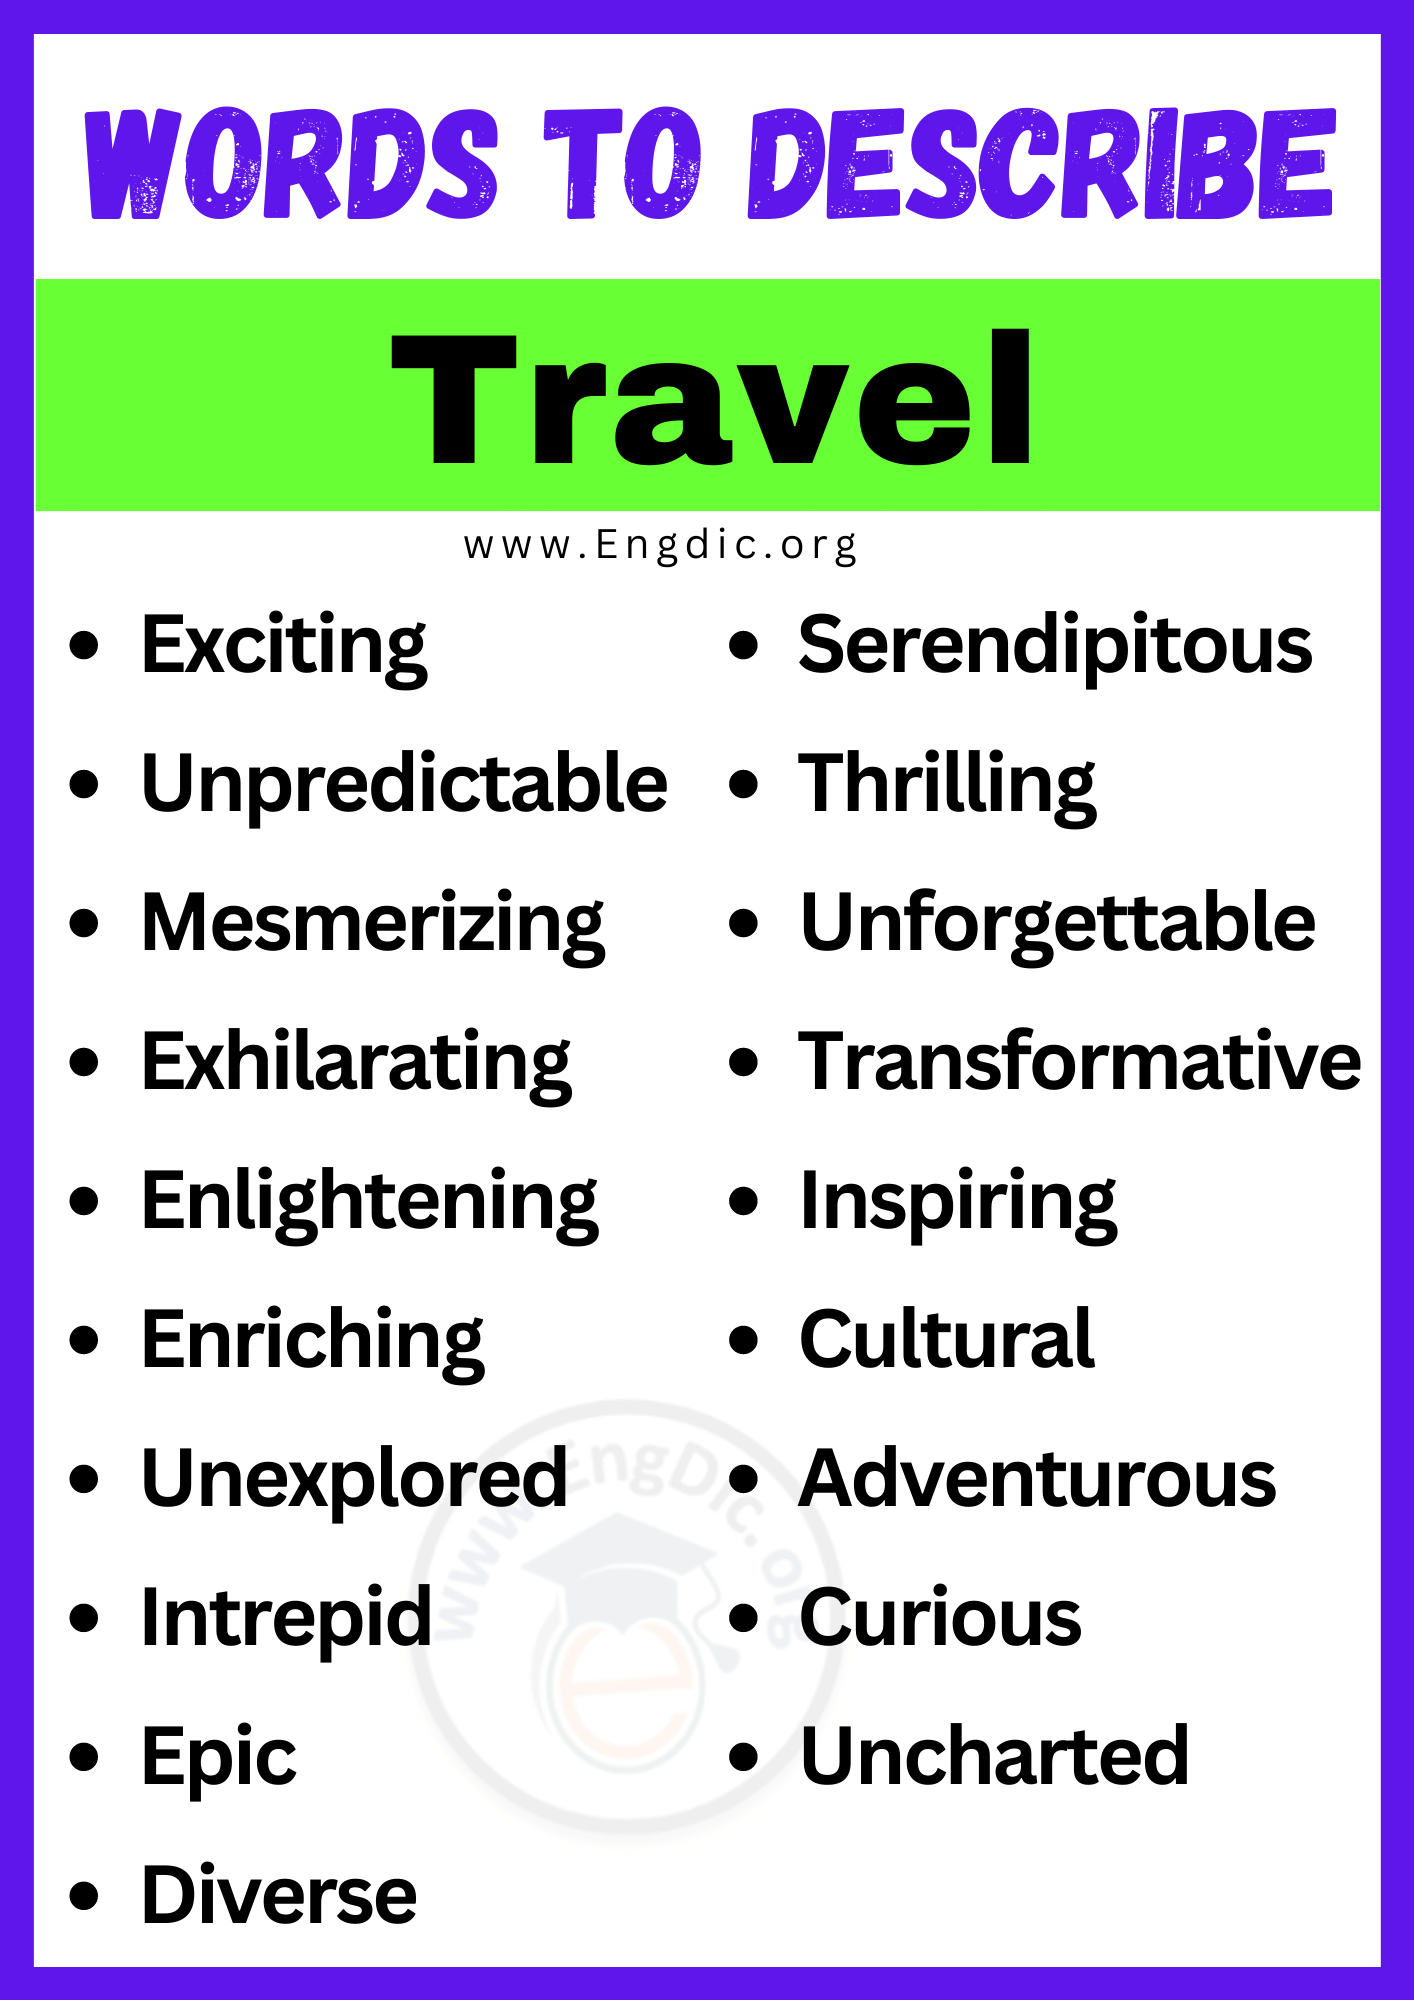 Words to Describe Travel